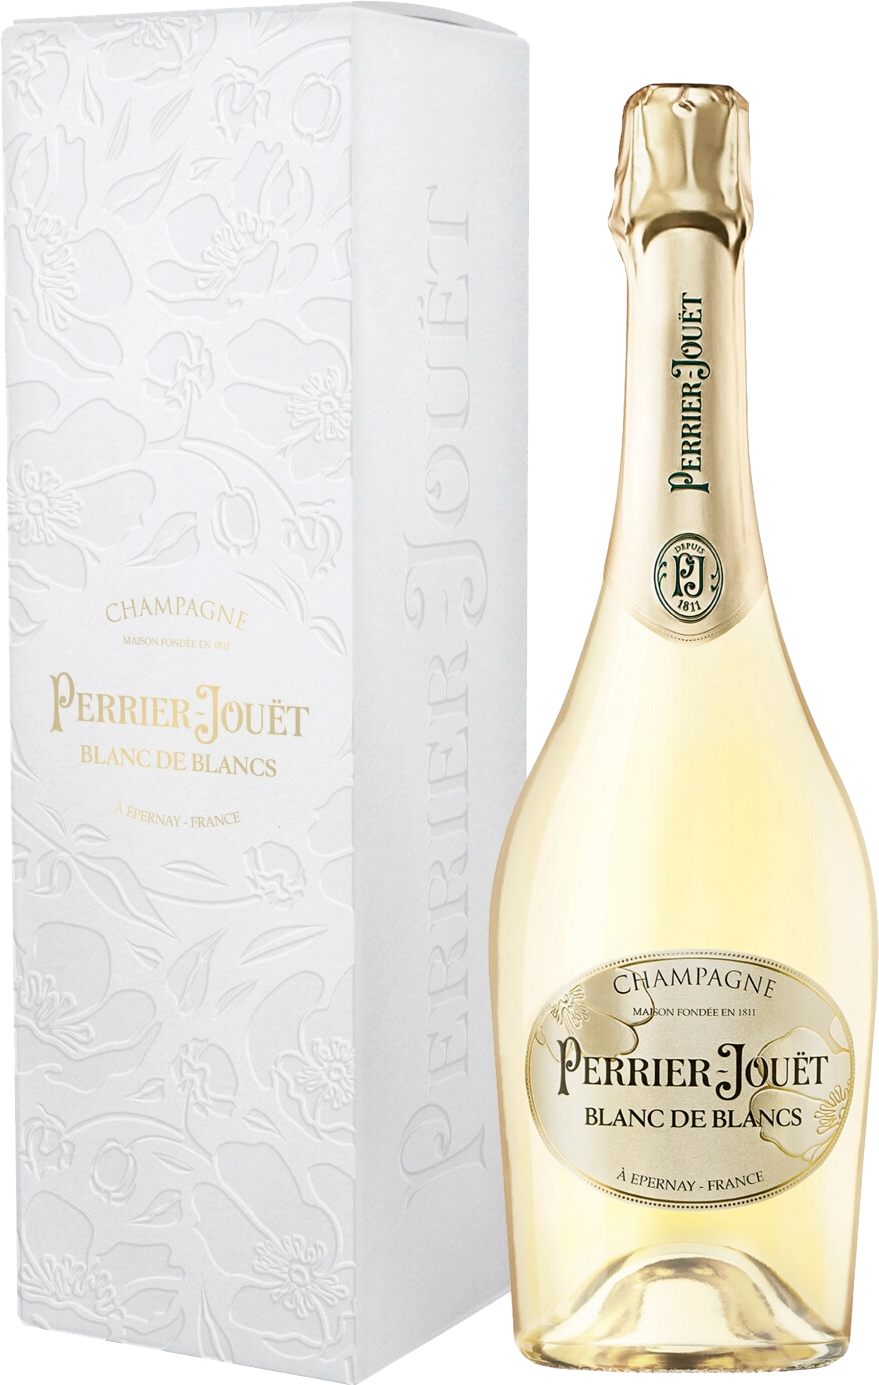 Perrier-Jouet Blanc De Blancs Champagne AOC Brut (gift box) ayala blanc de blancs brut champagne aoc gift box